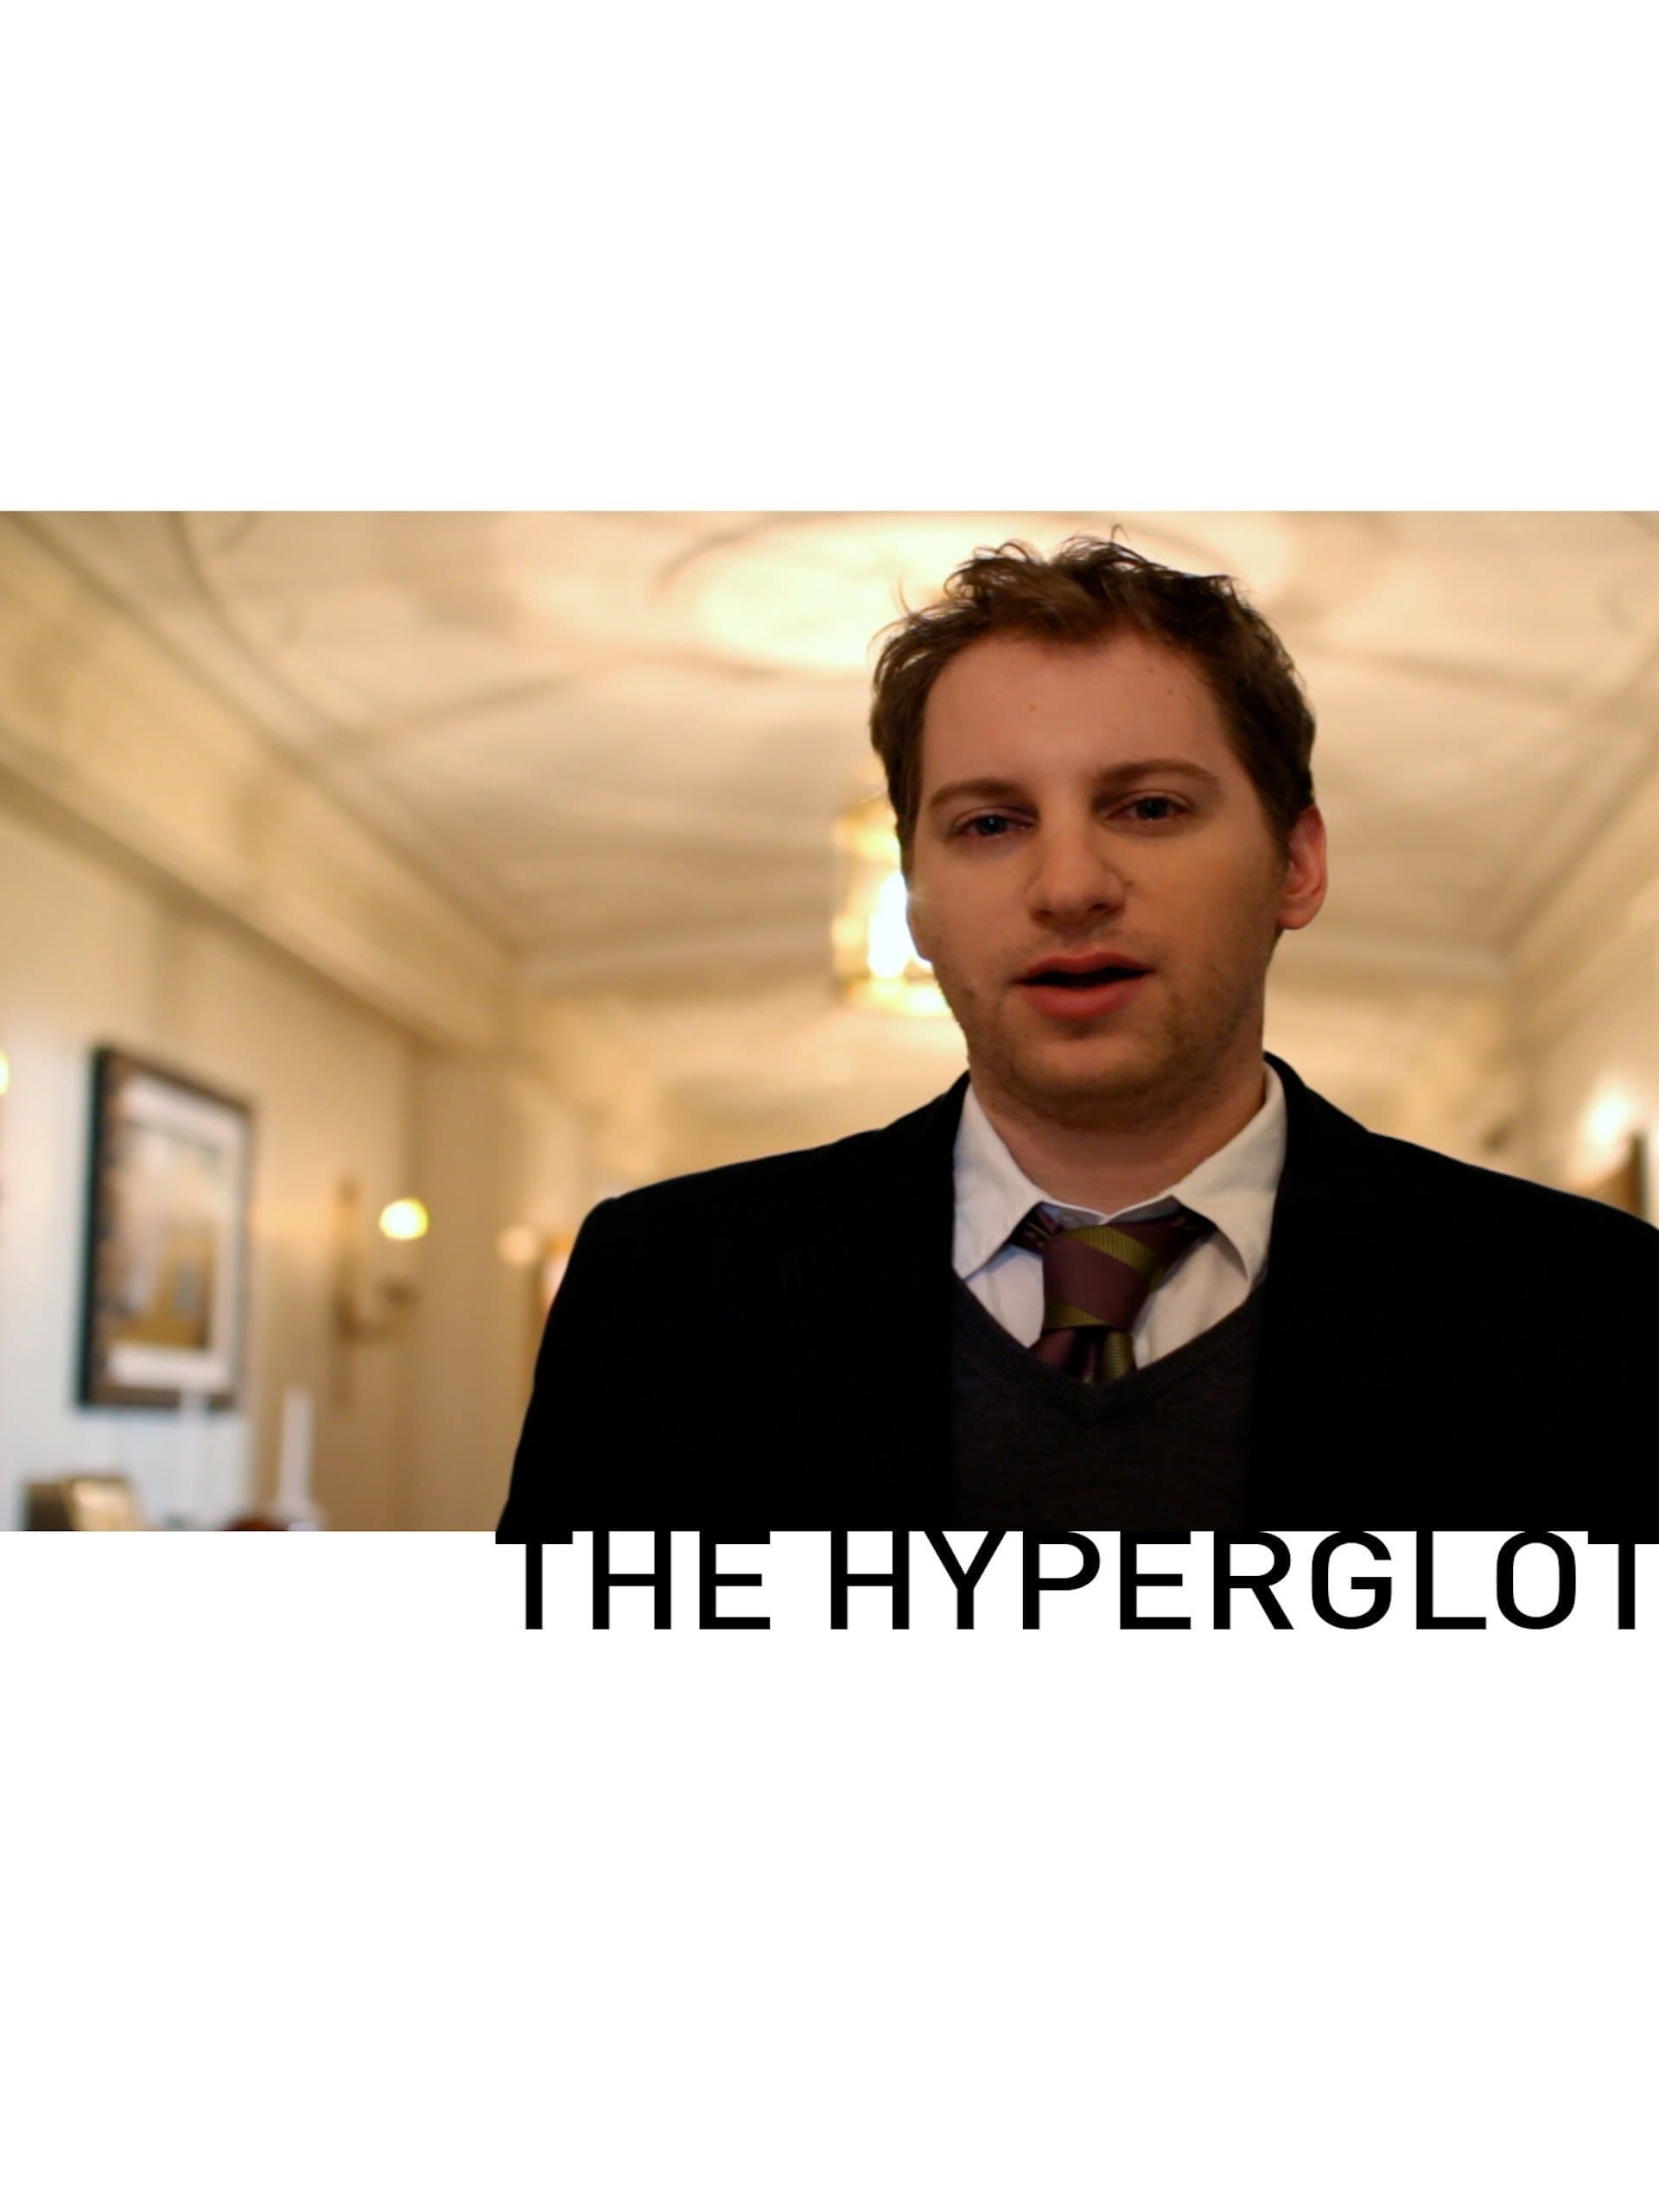 The Hyperglot (2013)